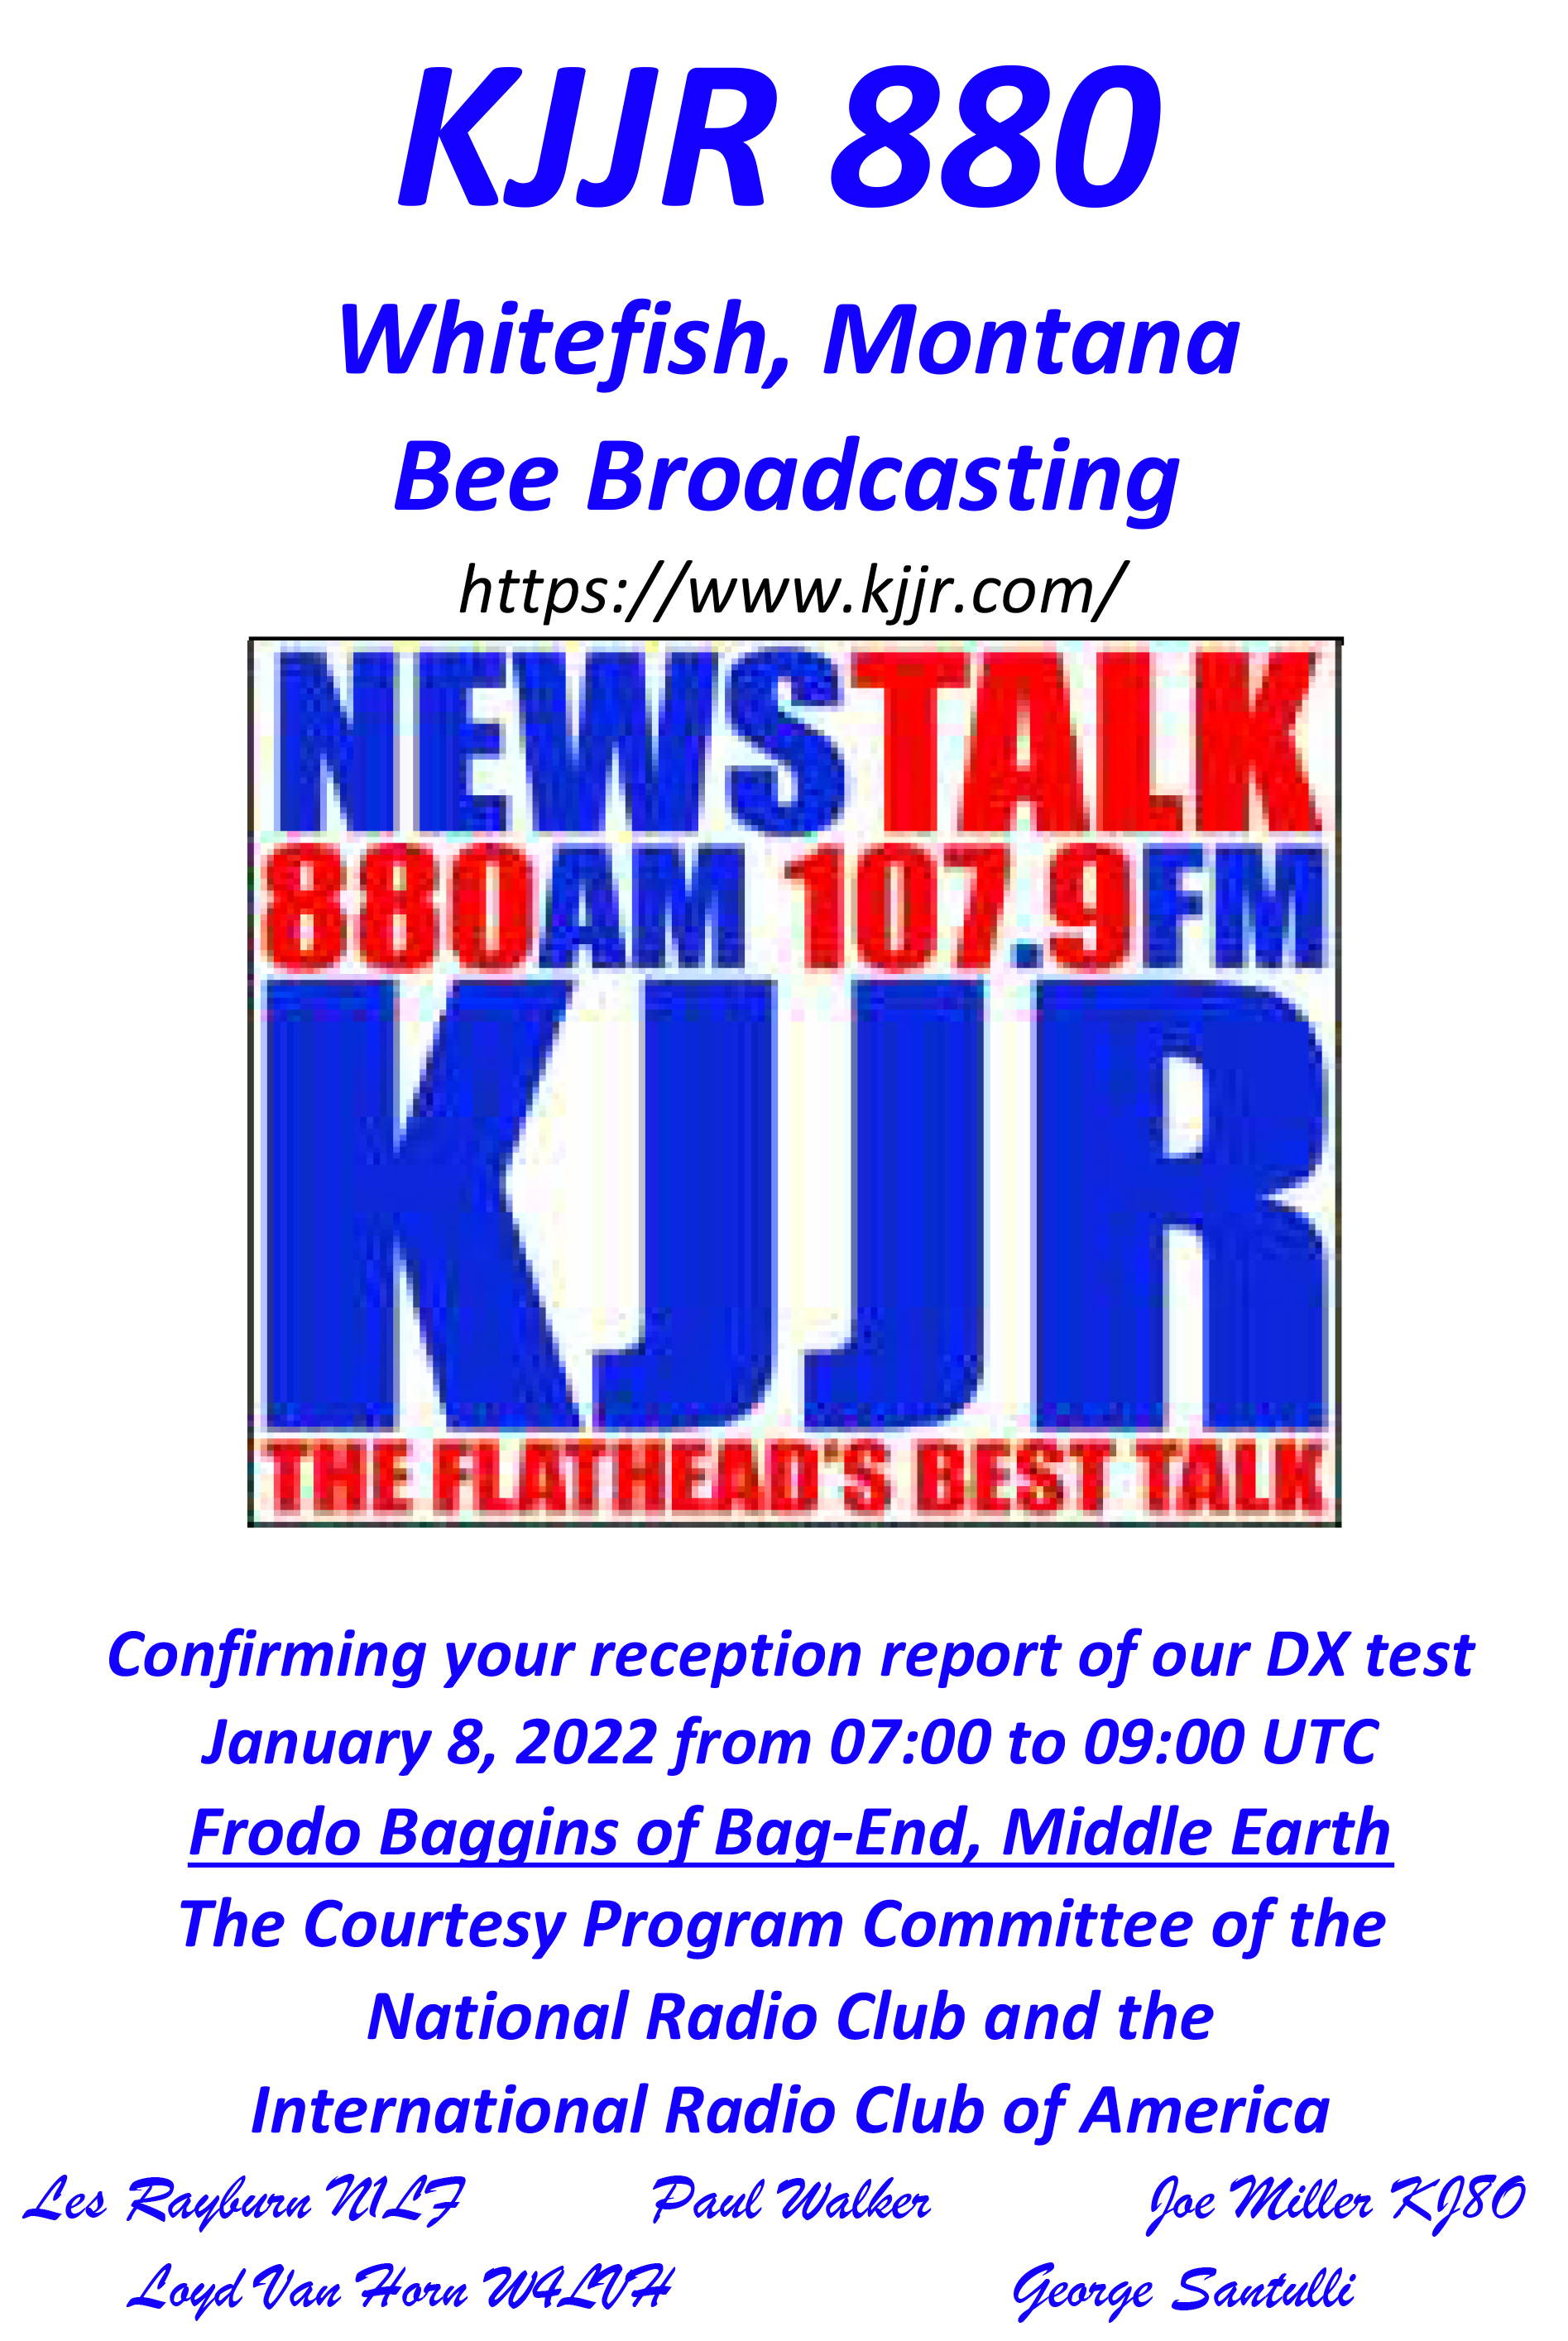 KJJR Radio 880 Whitefish, Montana